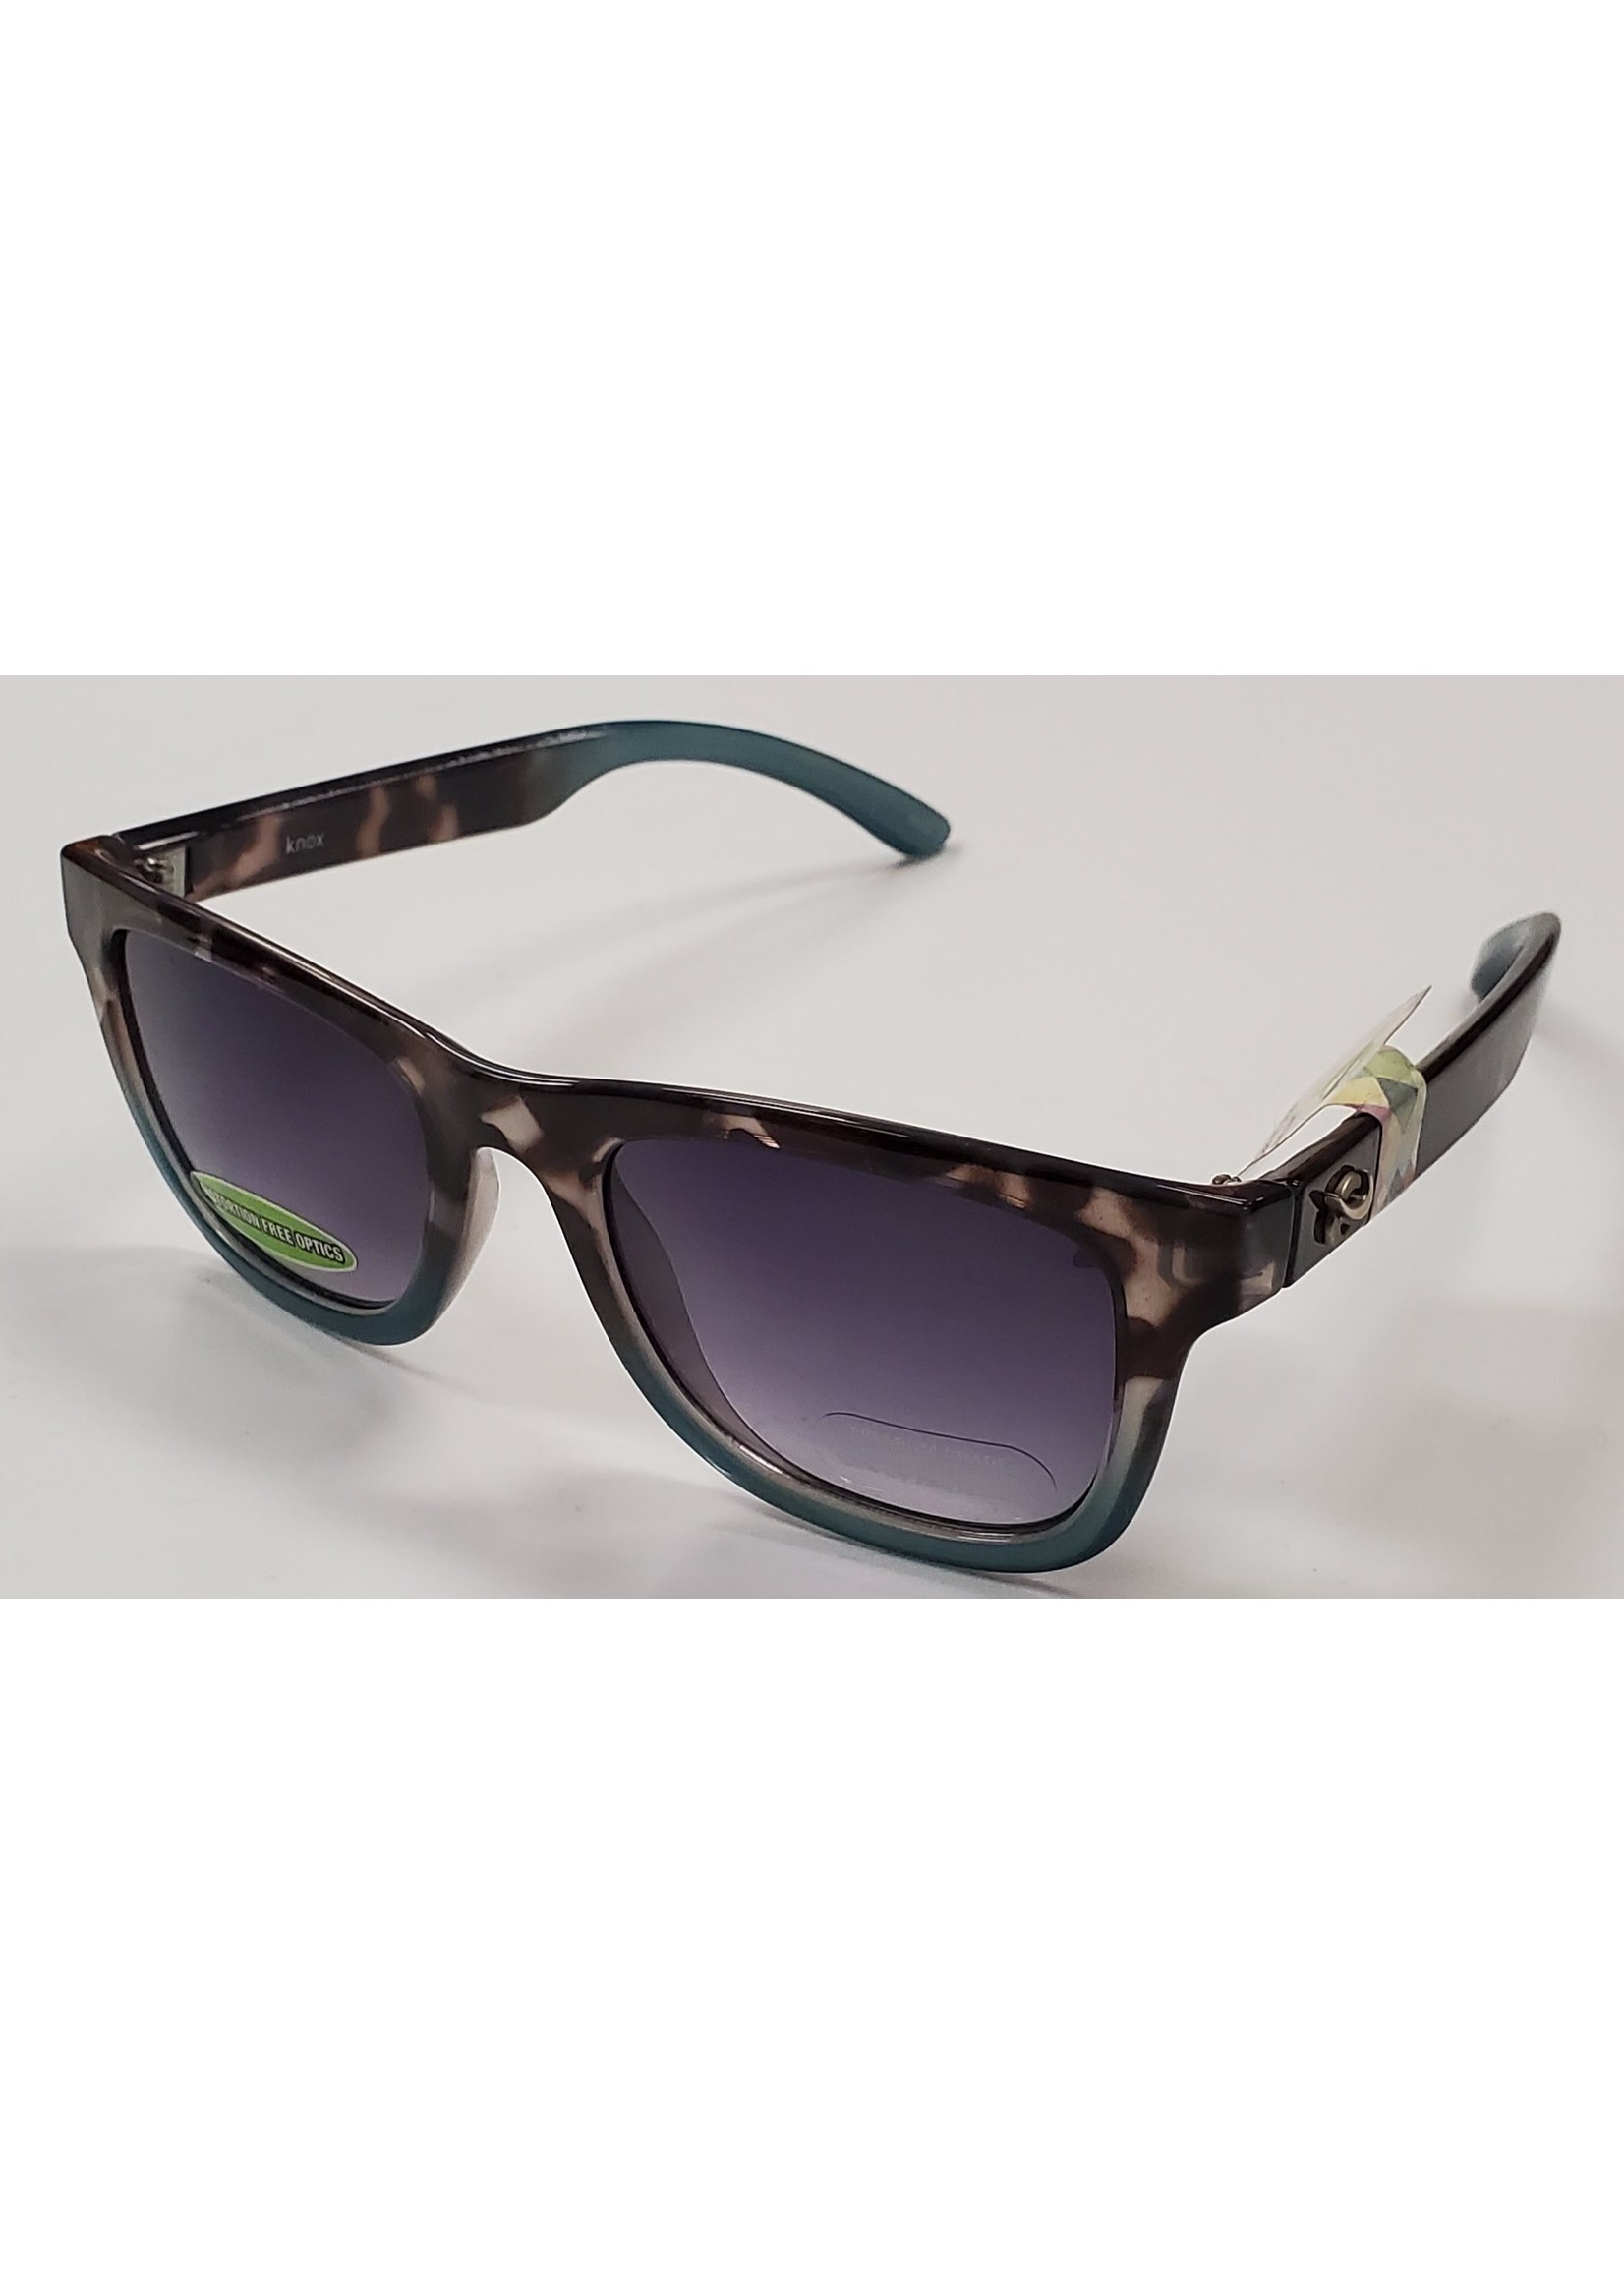 Urban Element Urban Element Premium Sport Sunglasses Women's Knox